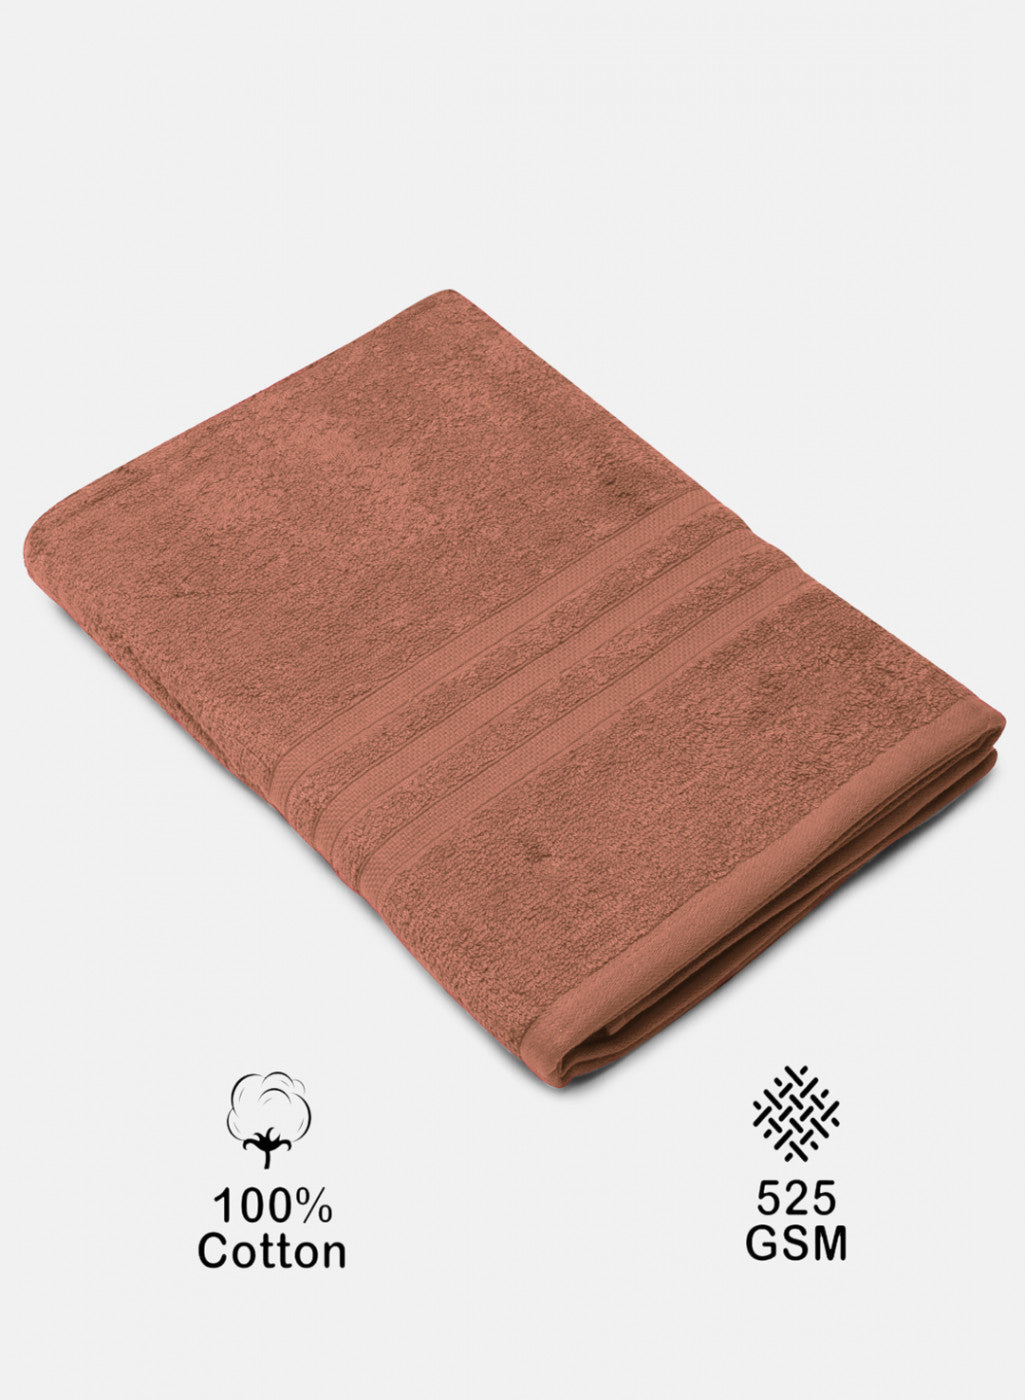 Brown Cotton 525 GSM Bath Towel